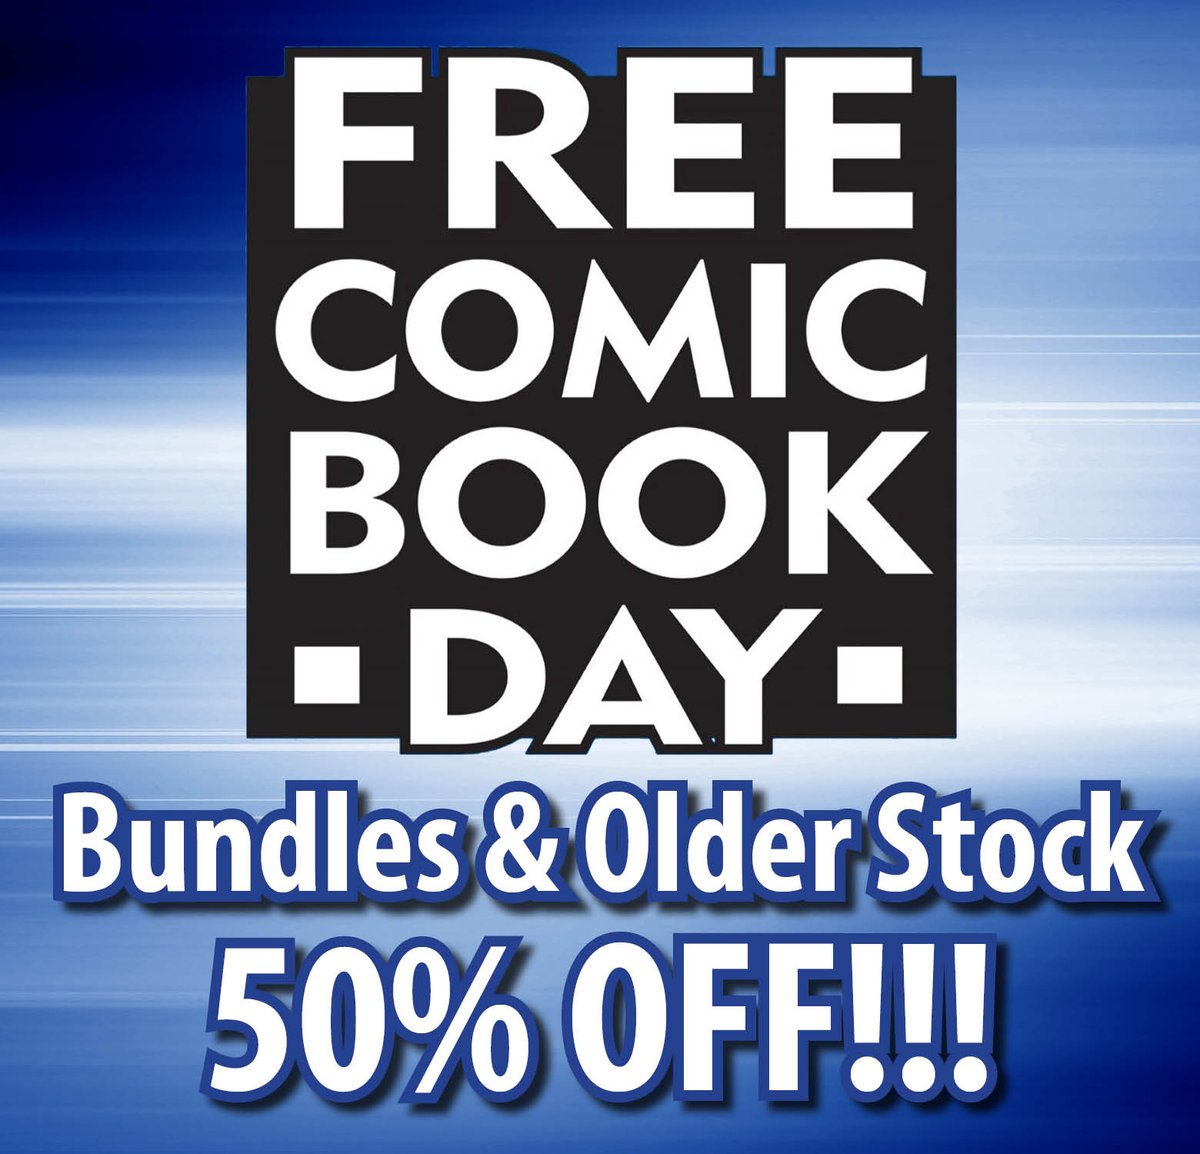 💥 50% OFF Free Comic Book Day bundles and older stock at tinyurl.com/FCBD-50!
💥 Sale ends 11:59pmPDT Sunday!
#comickingdomcreative #comickingdomrules #fcbd #freecomicbookday #discountcomics #comicsale